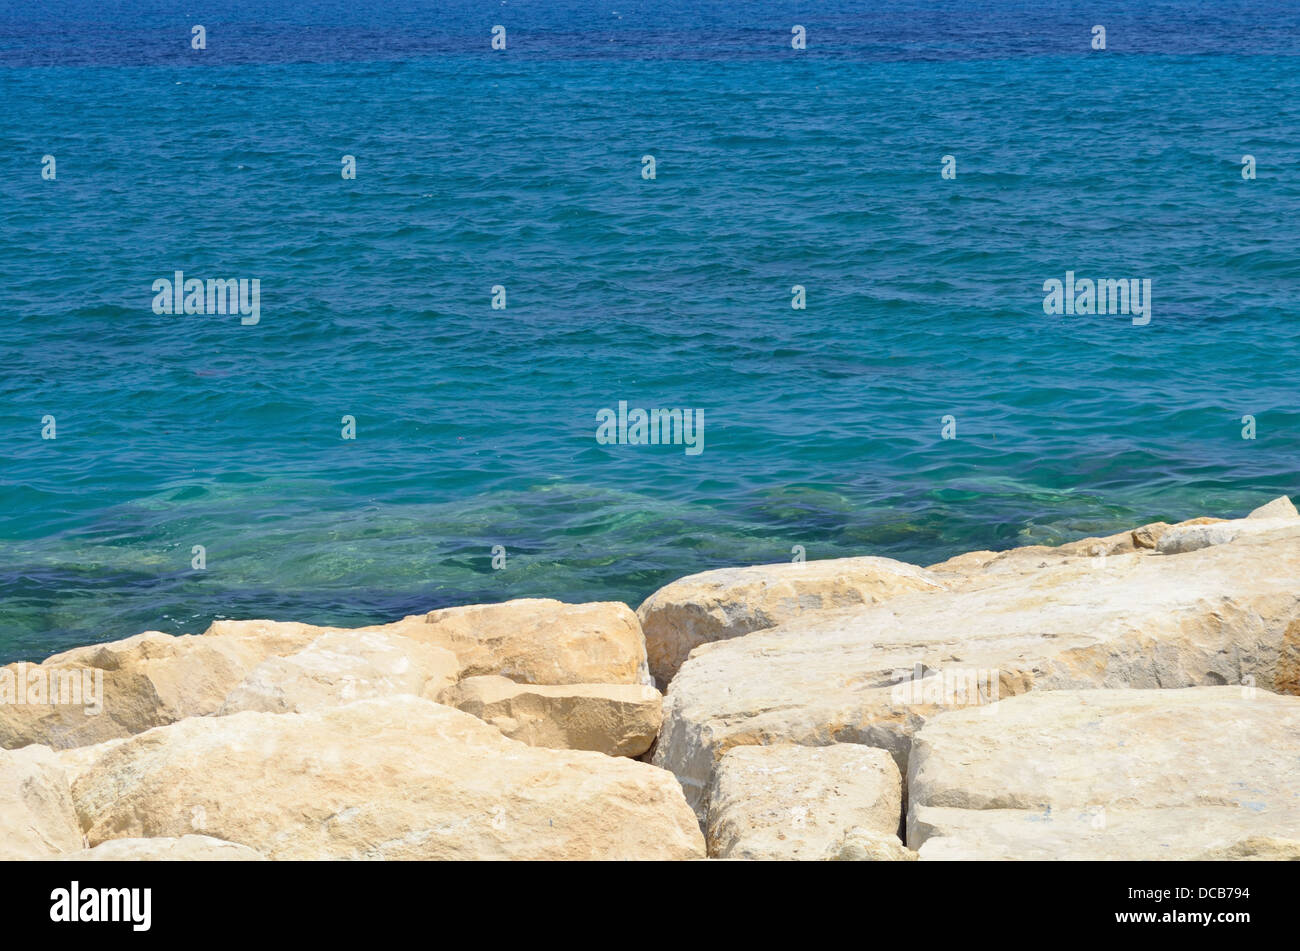 Rock, Welle, Meer, Steinen, Surfen, Wasser, Landschaft Stockfoto